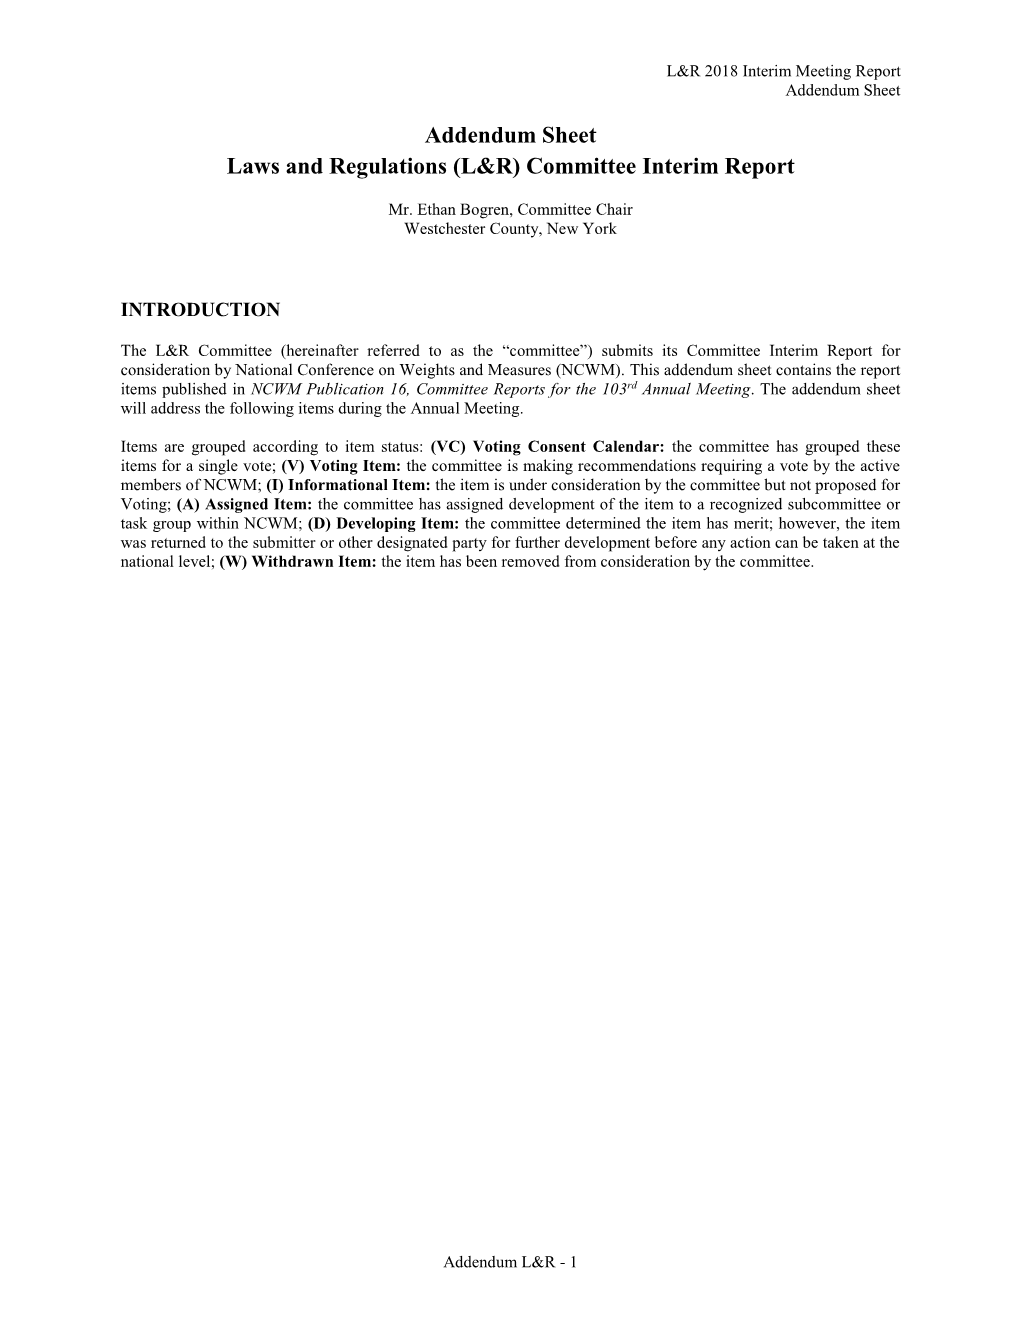 Addendum Sheet Laws and Regulations (L&R) Committee Interim Report